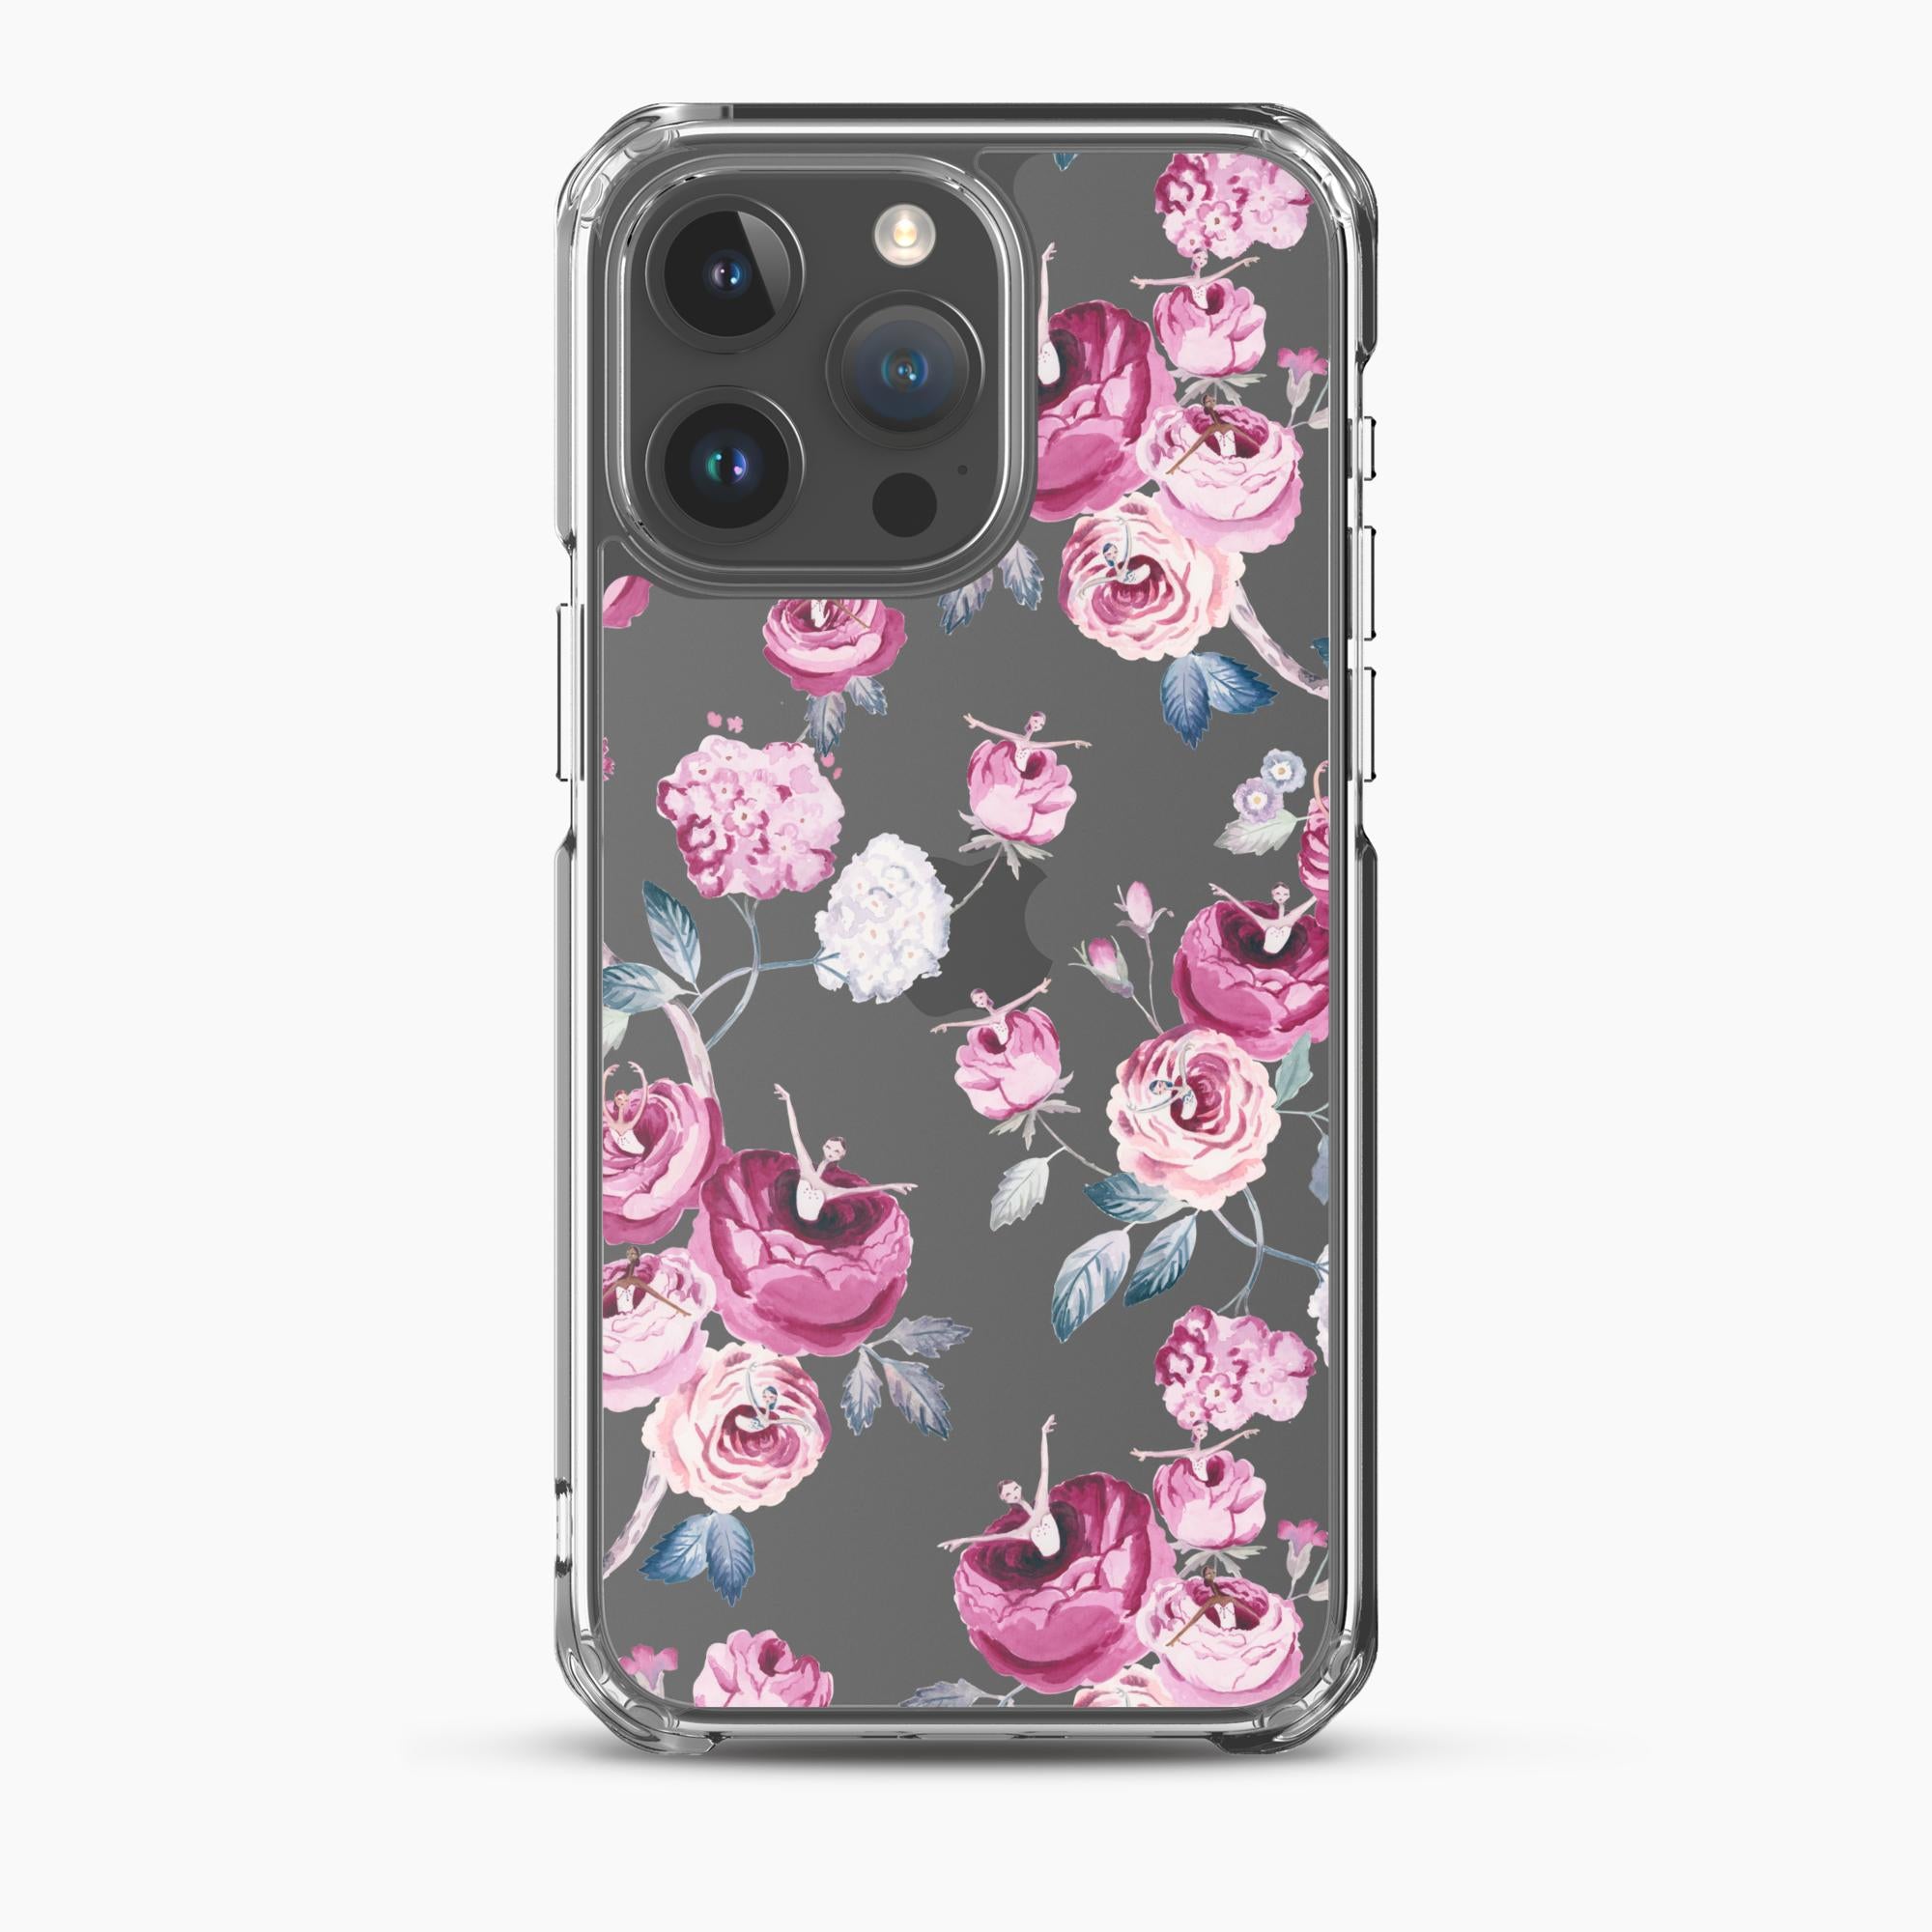 Waltz of the Garden Roses iPhone Case